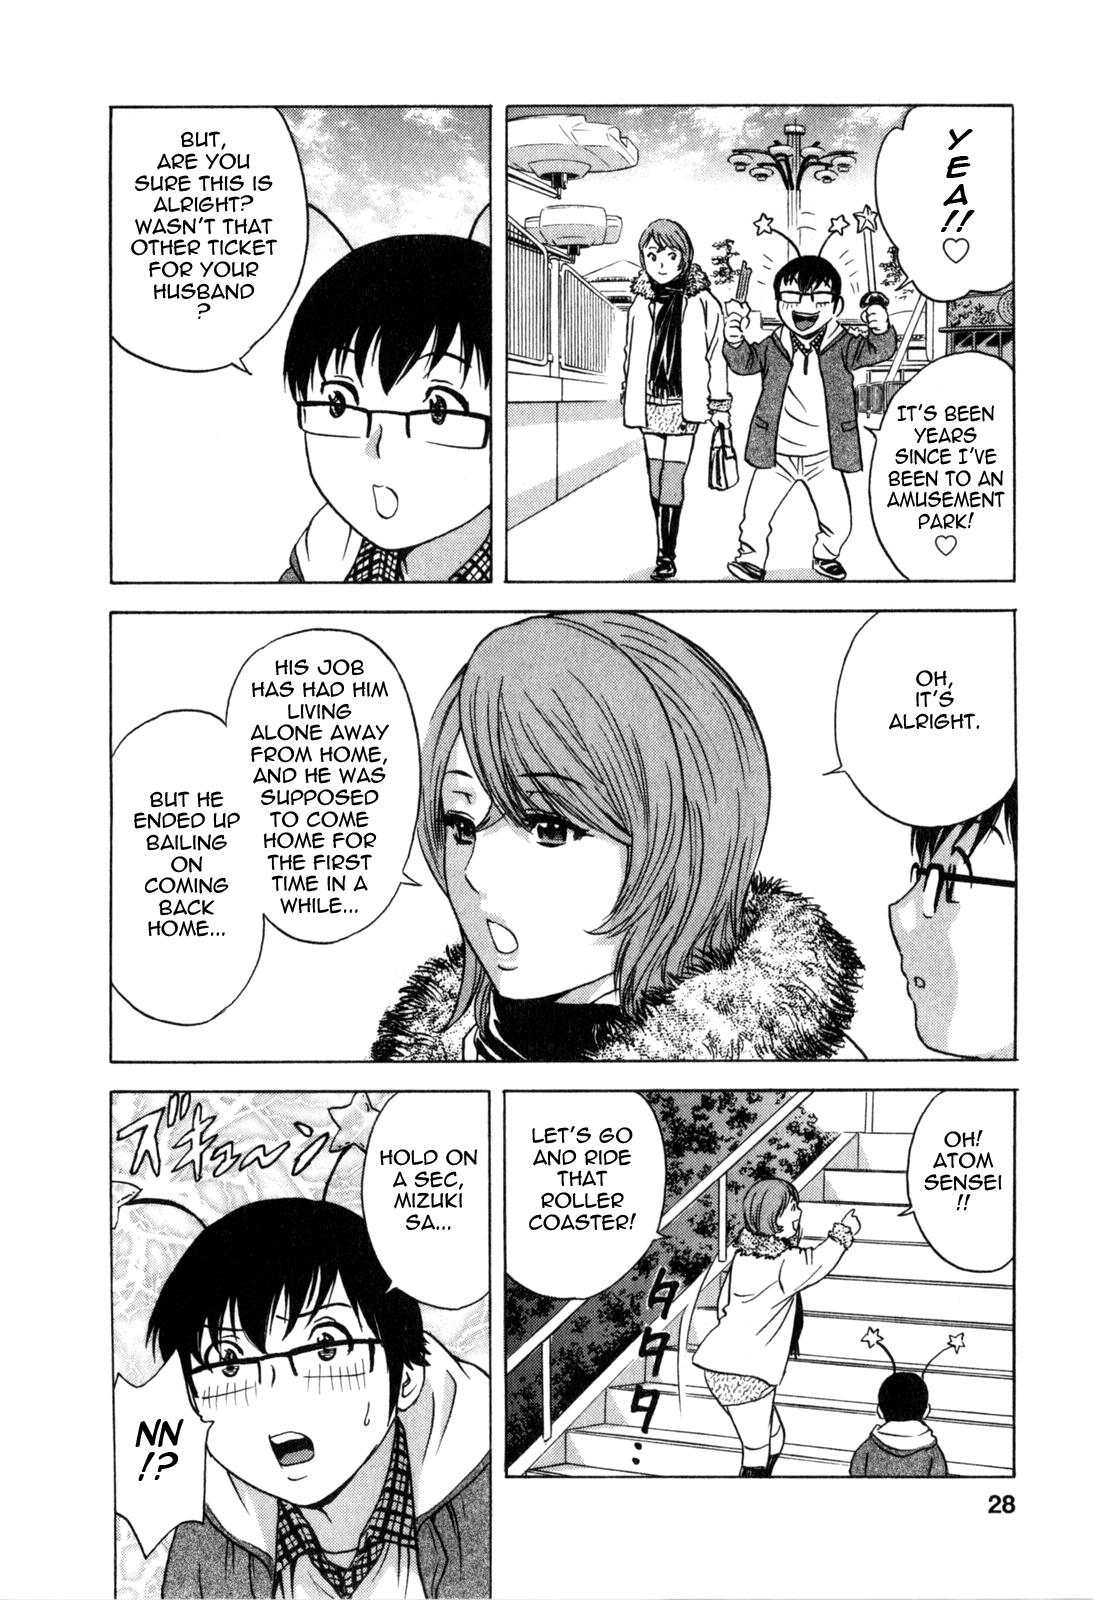 [Hidemaru] Life with Married Women Just Like a Manga 3 - Ch. 1-6 [English] {Tadanohito} 30